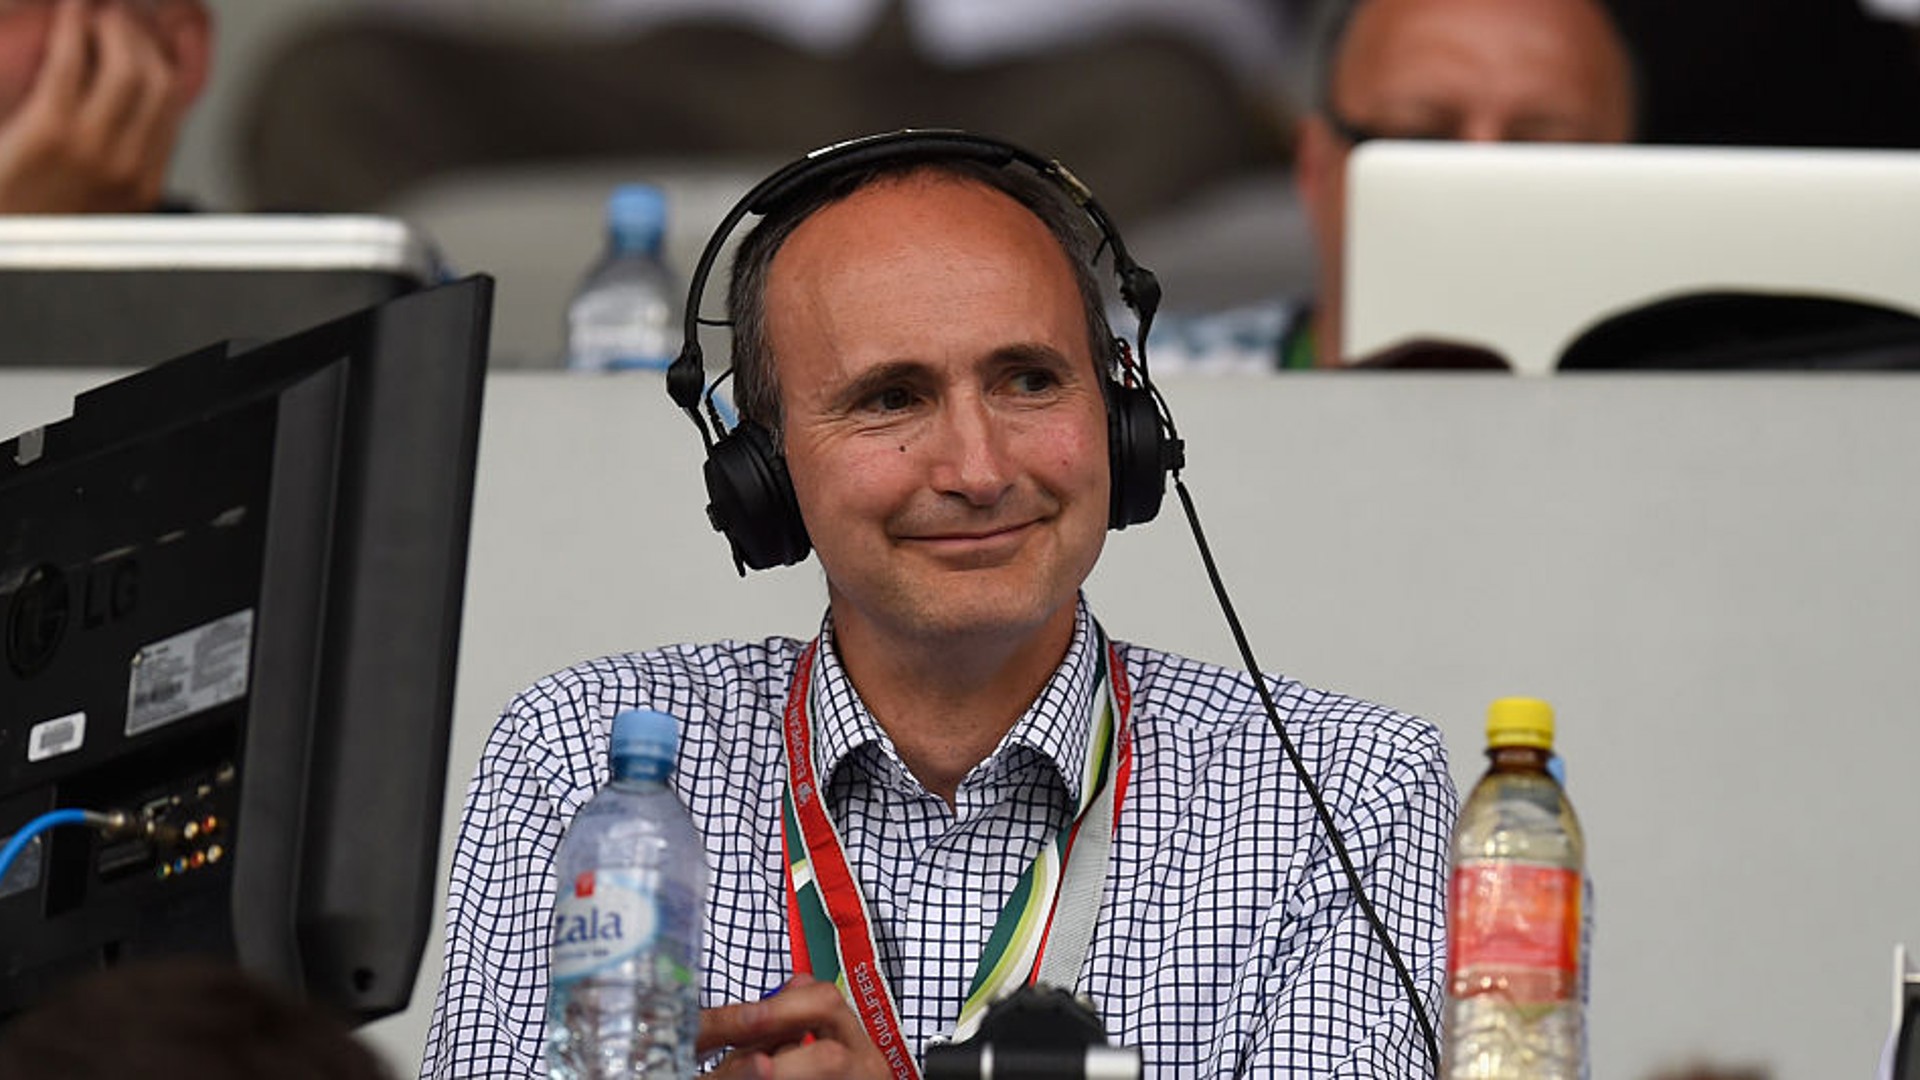 THE VOICE OF FOOTBALL: BBC 5 Live Football Correspondent John Murray